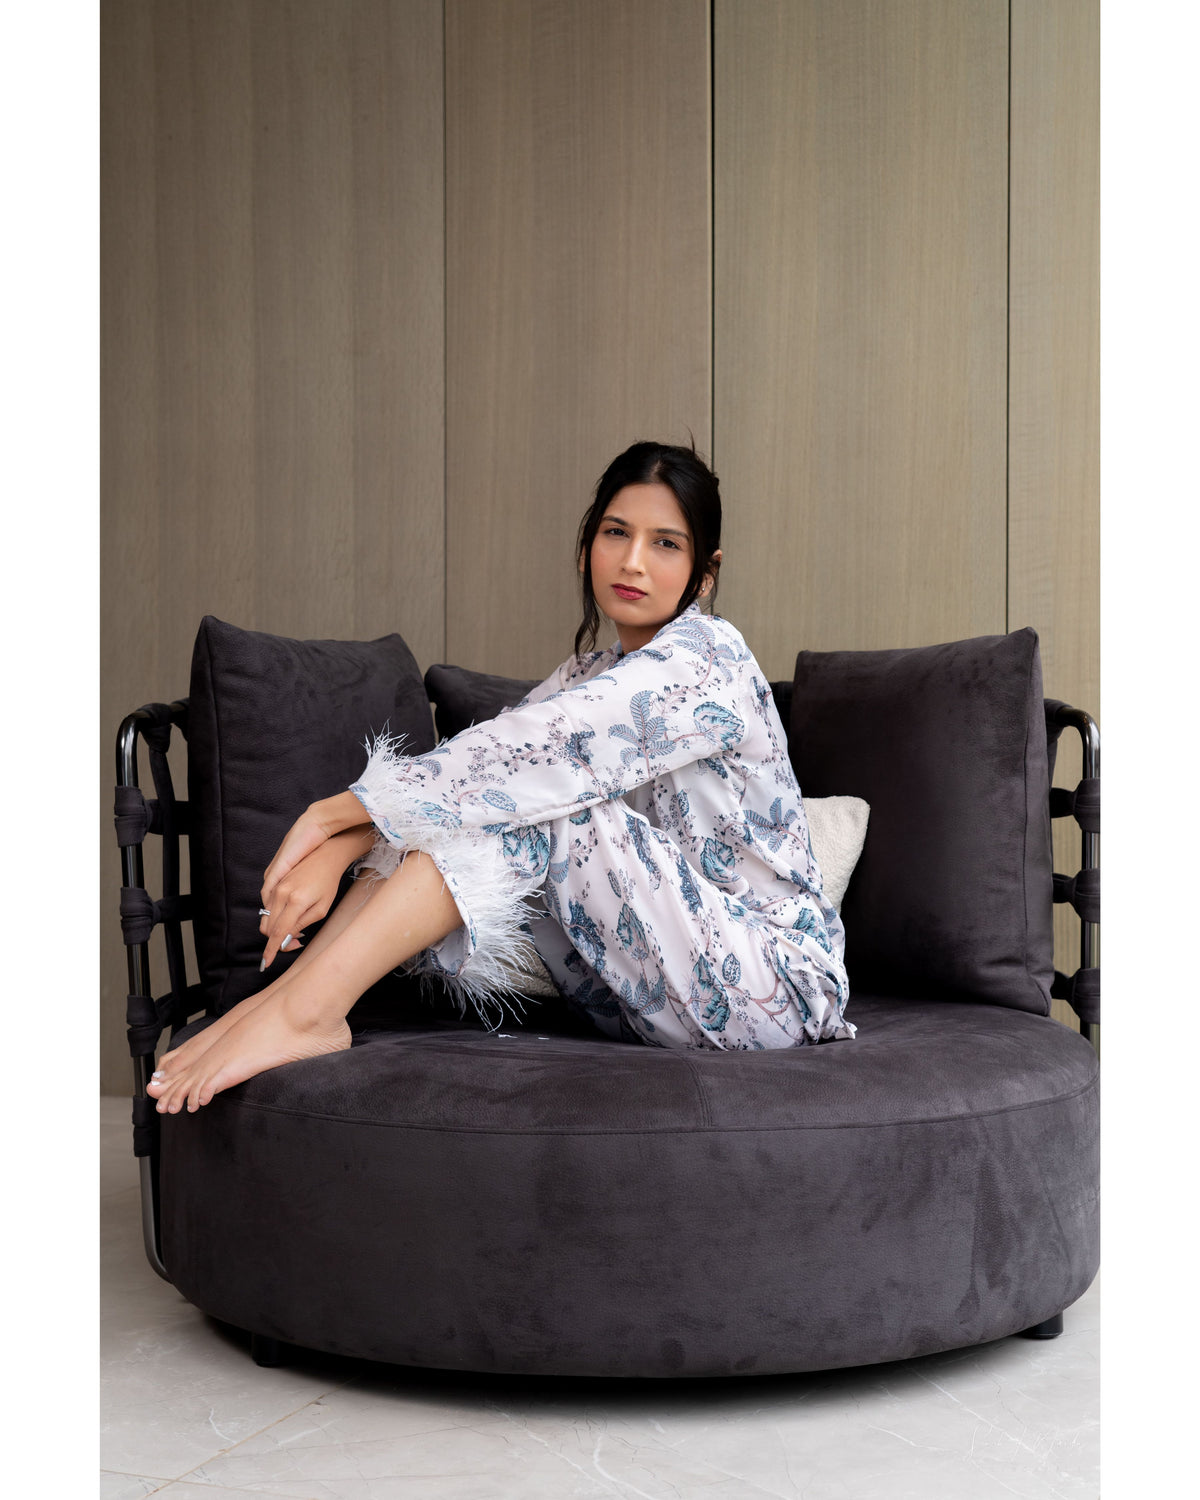 Floral furrry pajama set